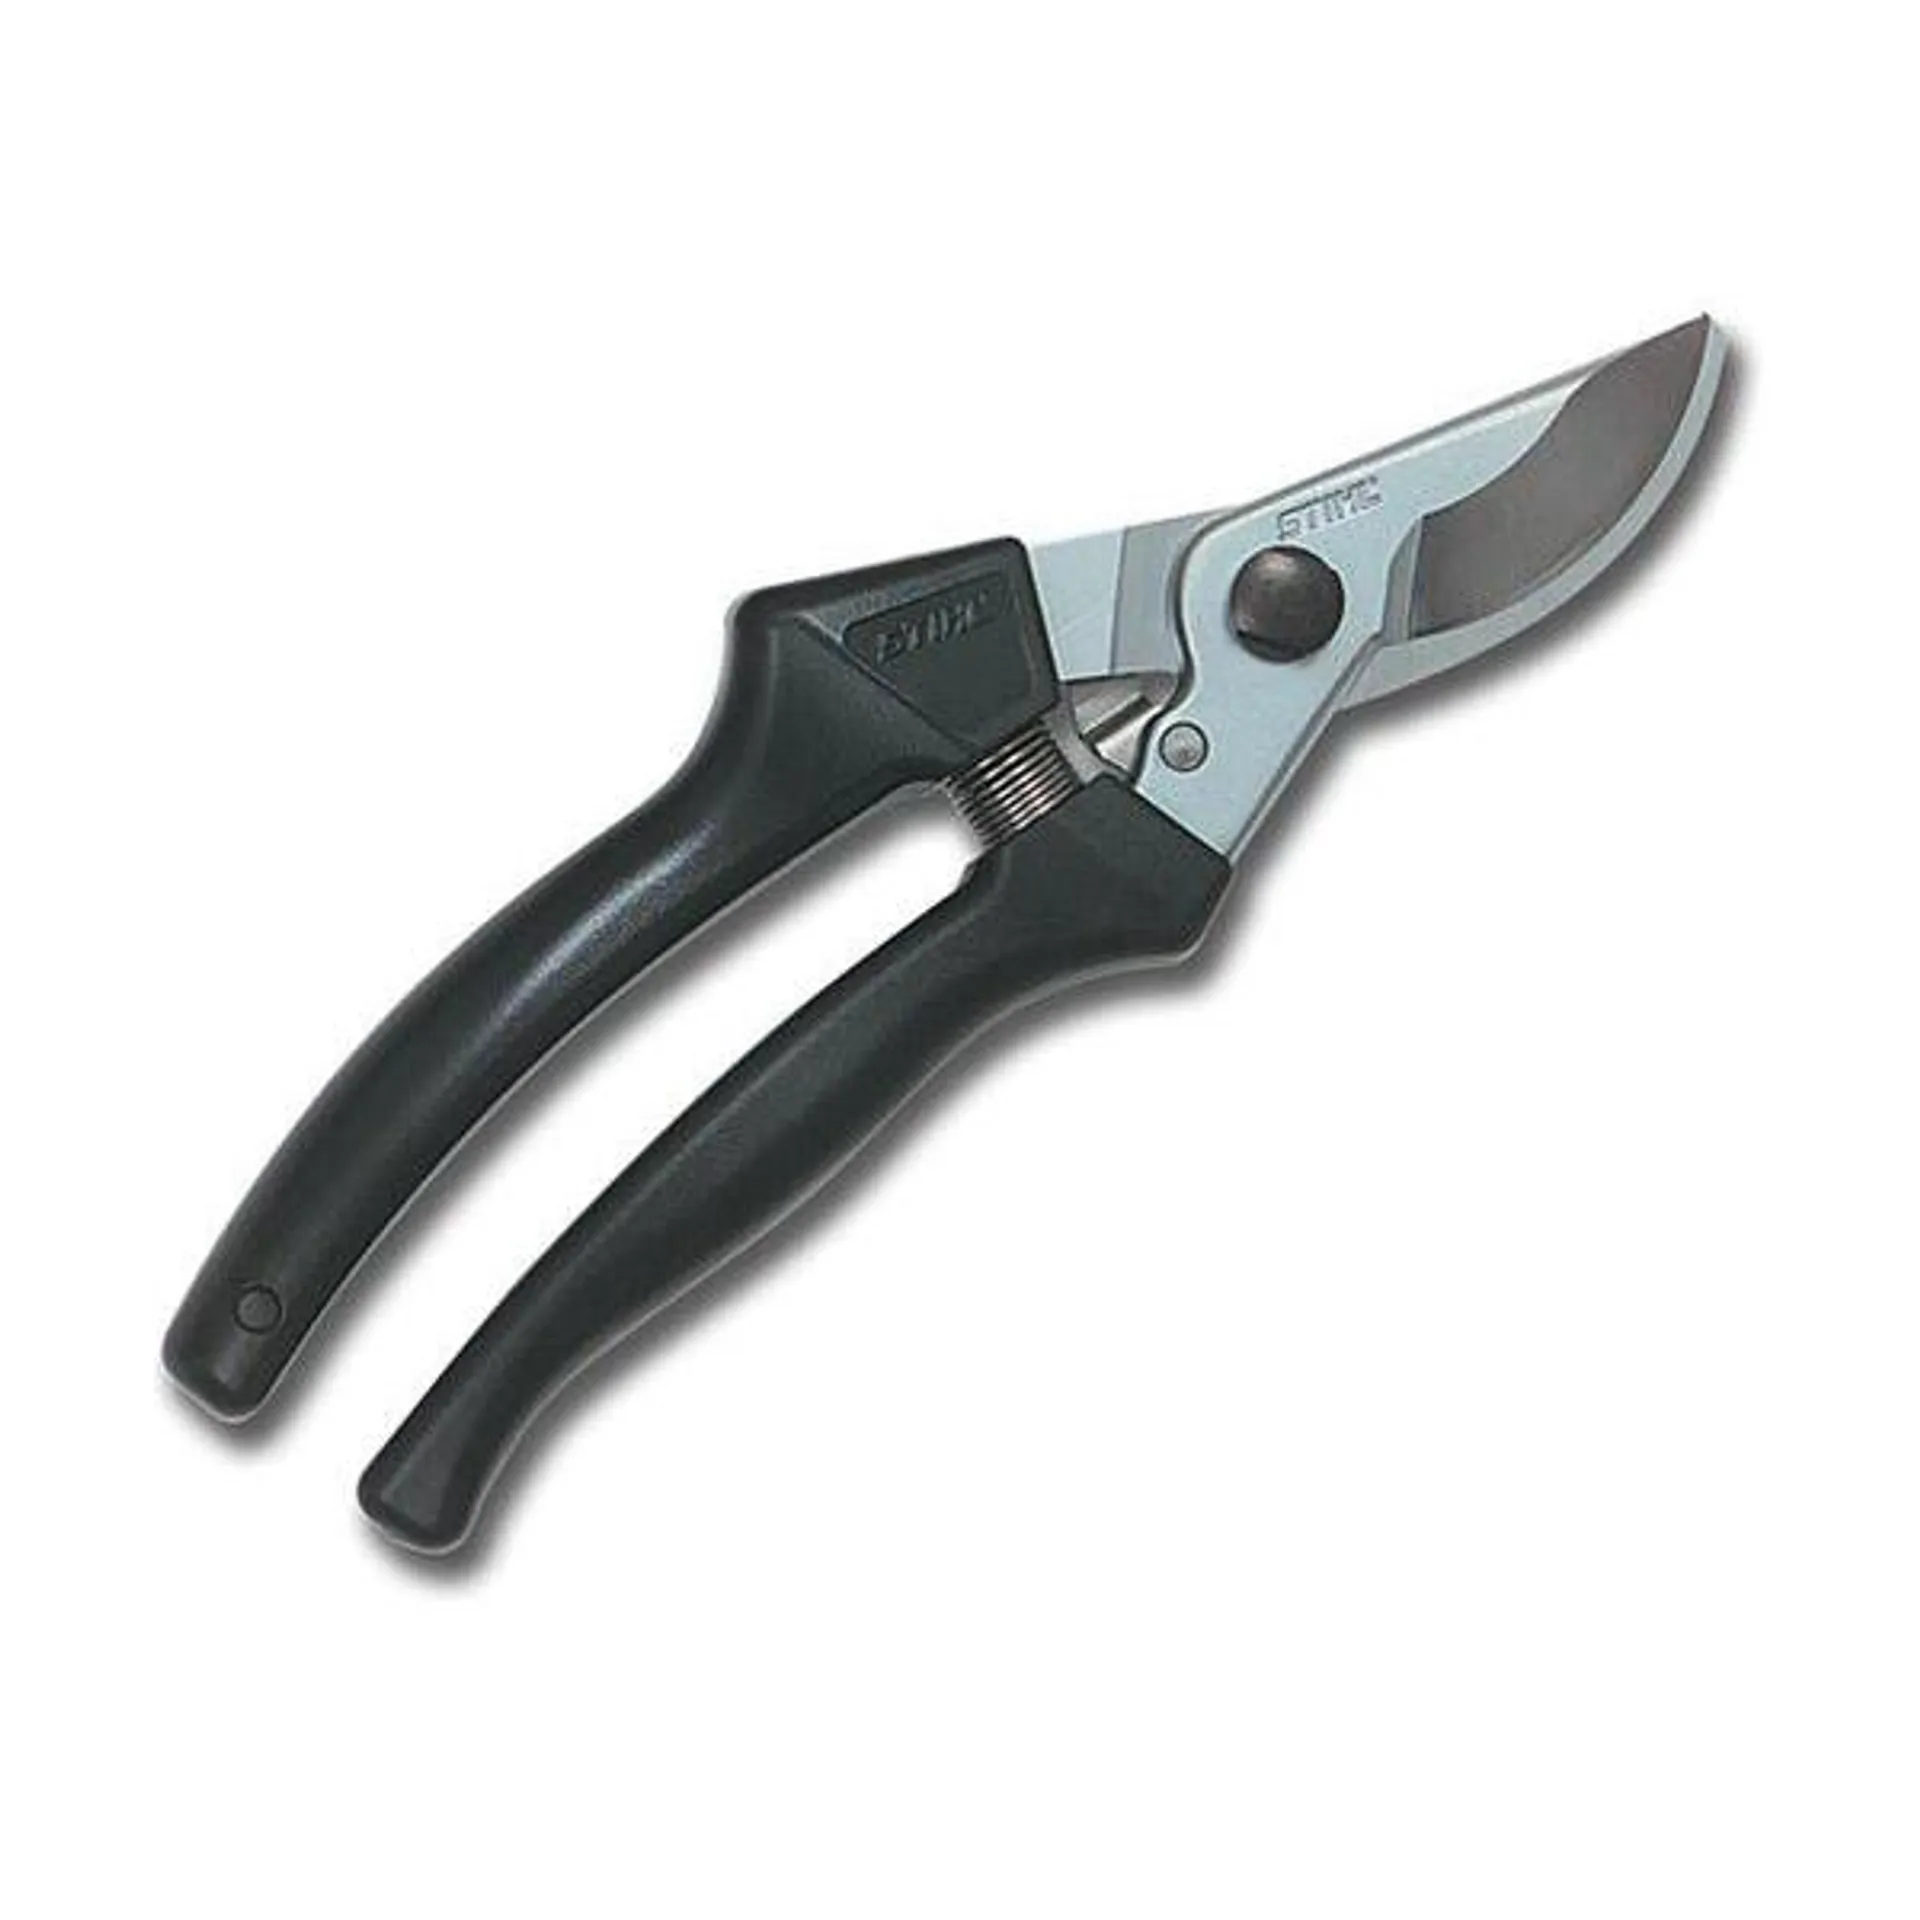 PP 40 Hand Pruner, 0.8 in Cutting Capacity, Offset Blade, PVC/Steel Handle, Comfort Grip Handle